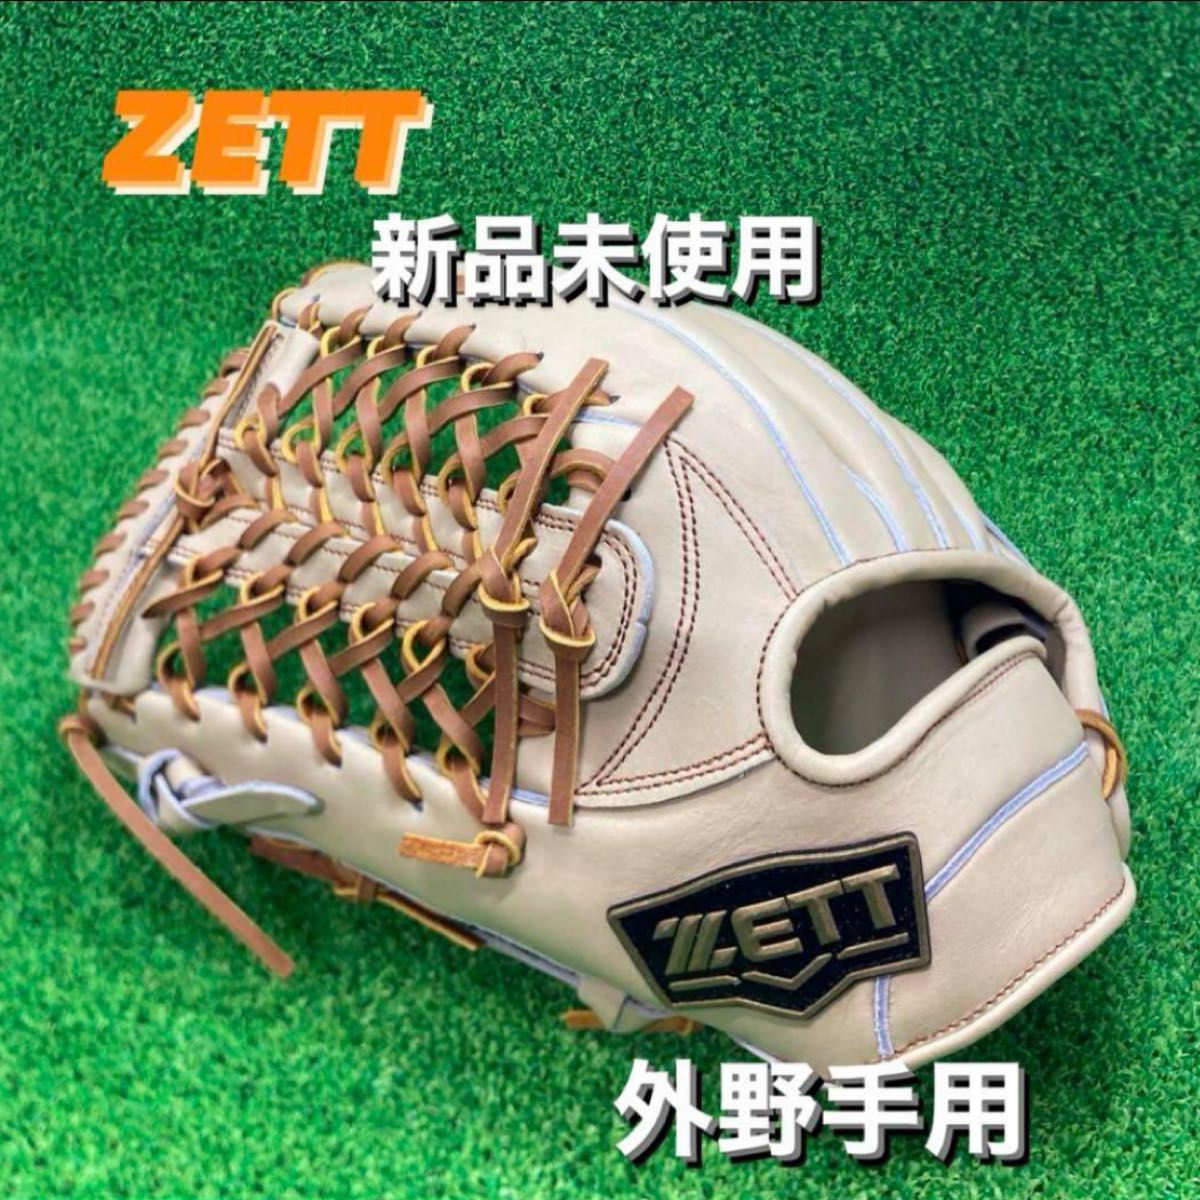 ZETT ゼット 外野手用 グローブ 外野用 硬式野球 左投げ